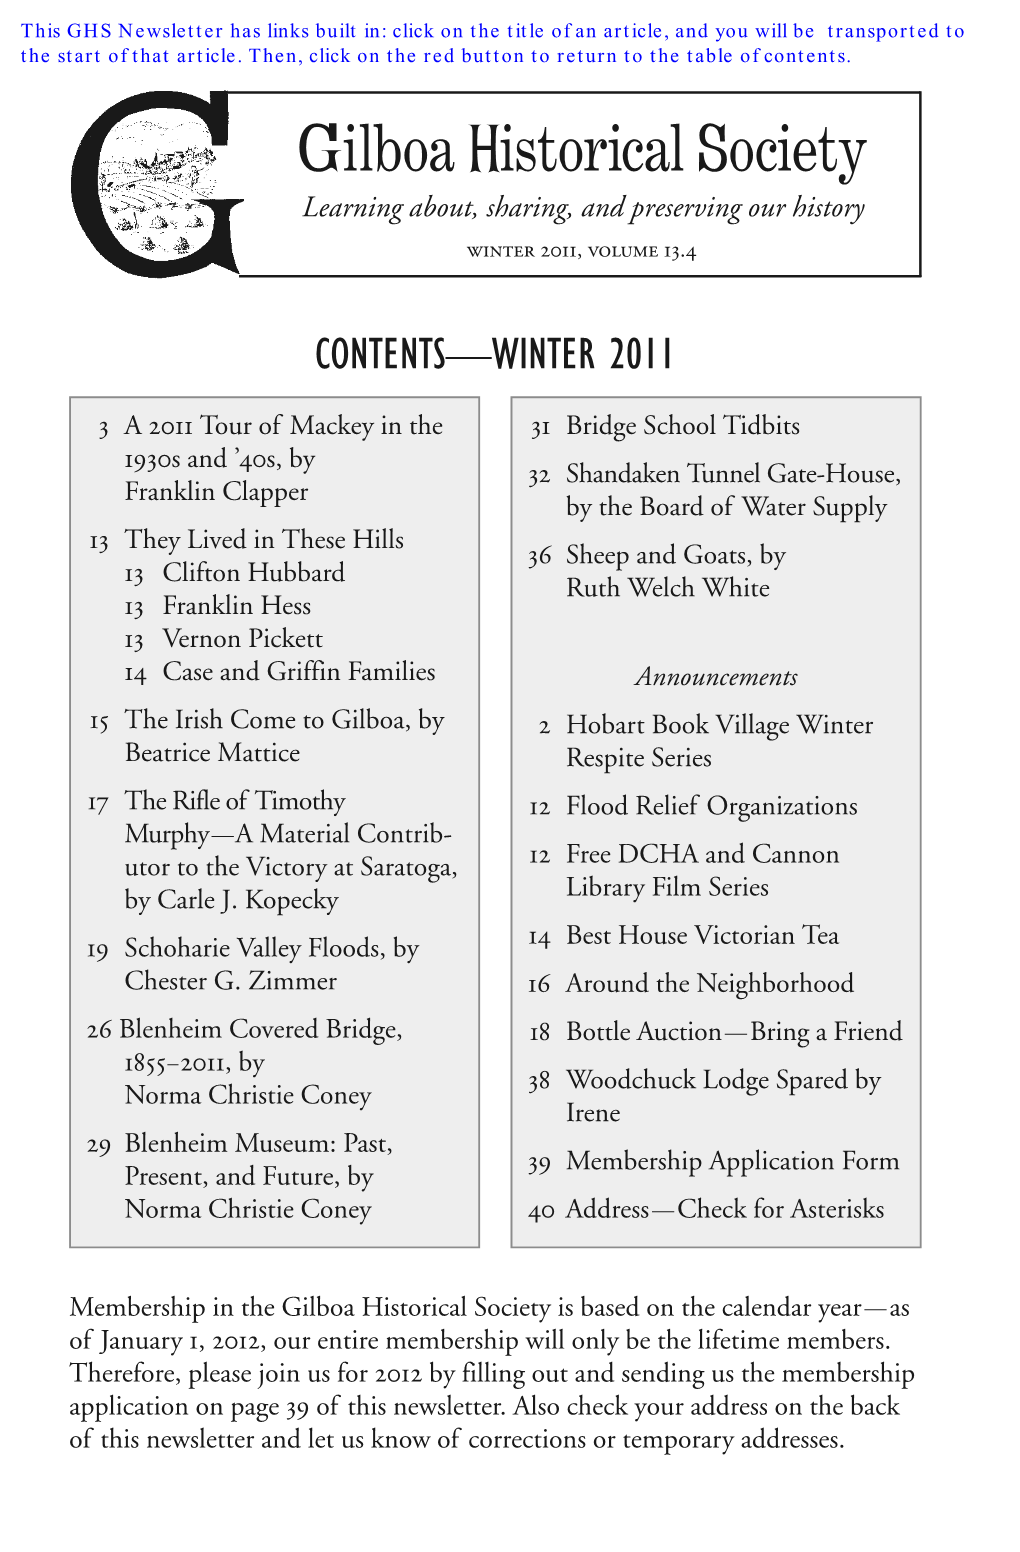 Volume 13.4 Winter 2011